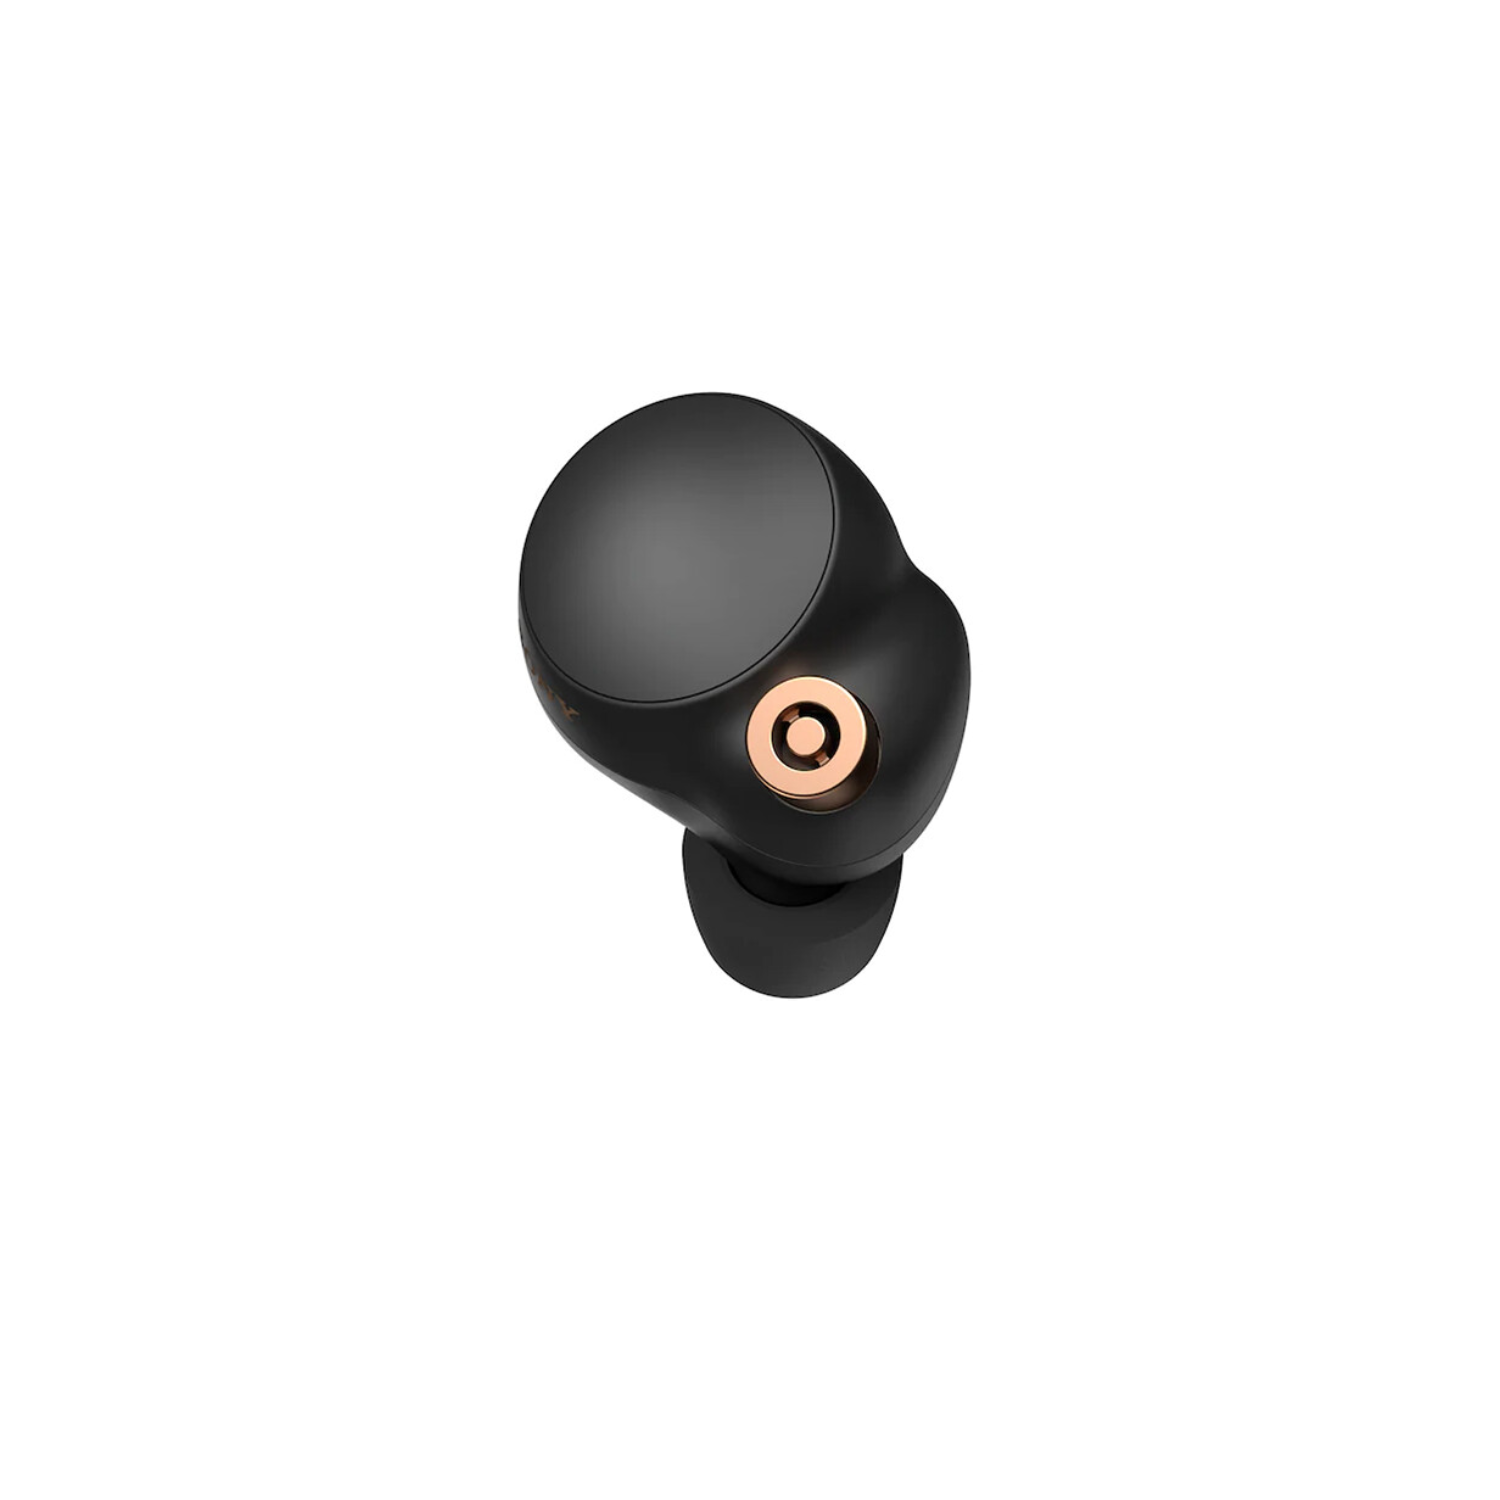 Sony WF-1000XM4 - True wireless earphones with mic - in-ear - Bluetooth - active noise canceling